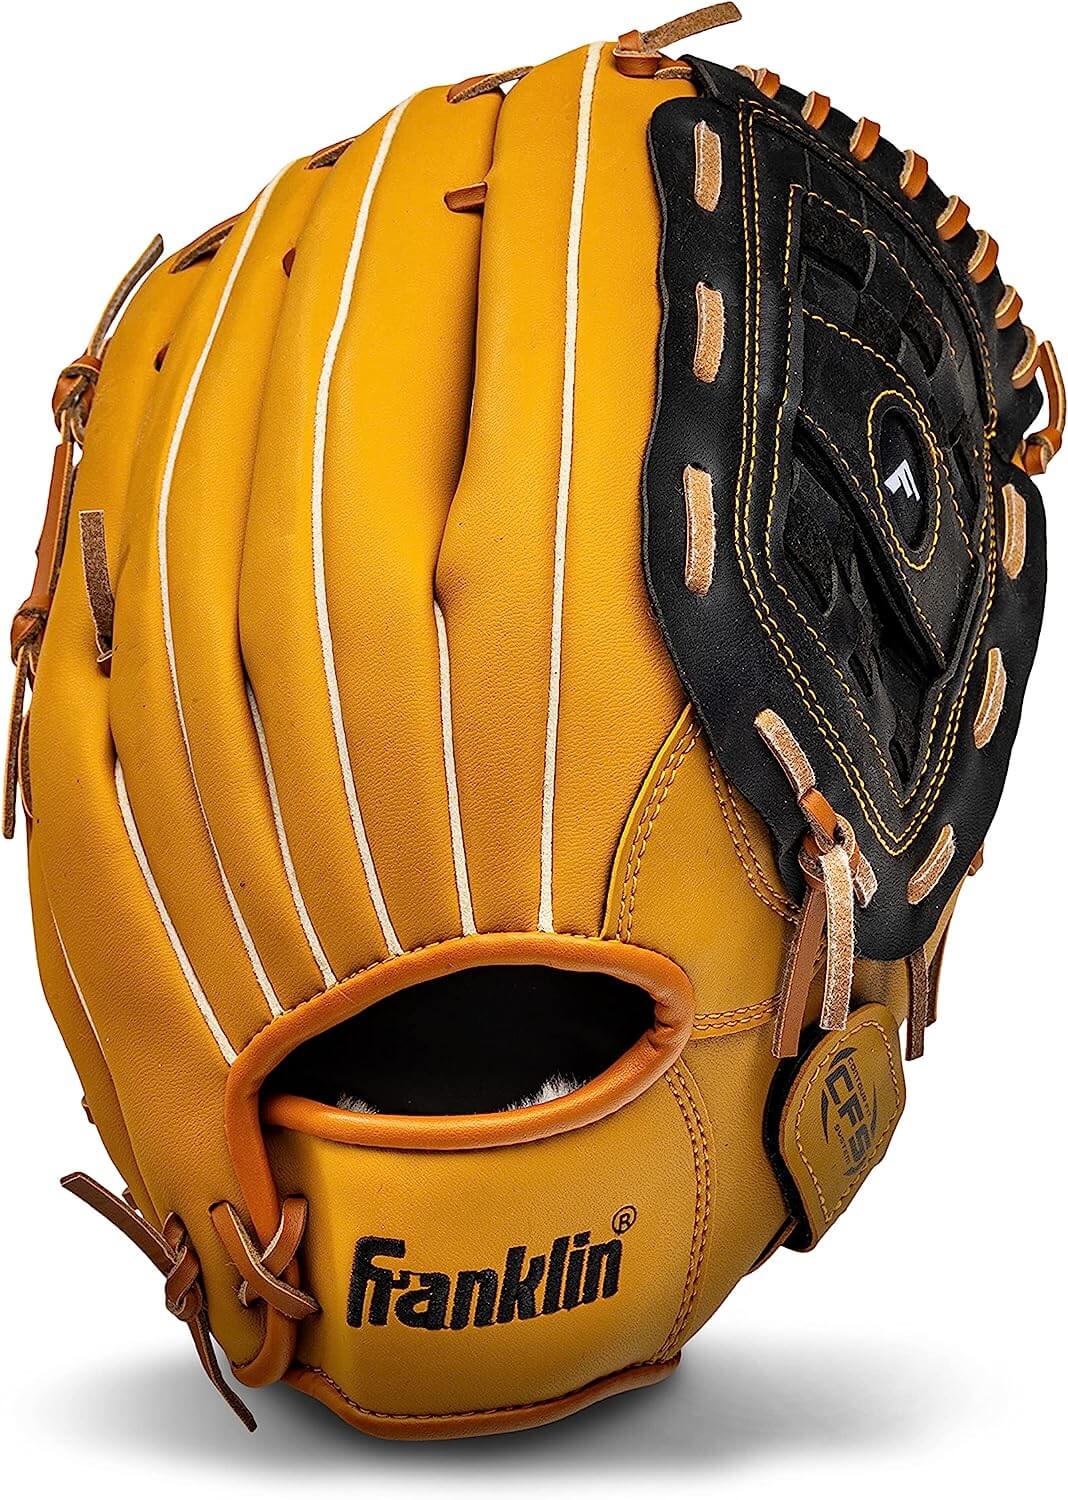 Franklin Sports Softball and Baseball Glove